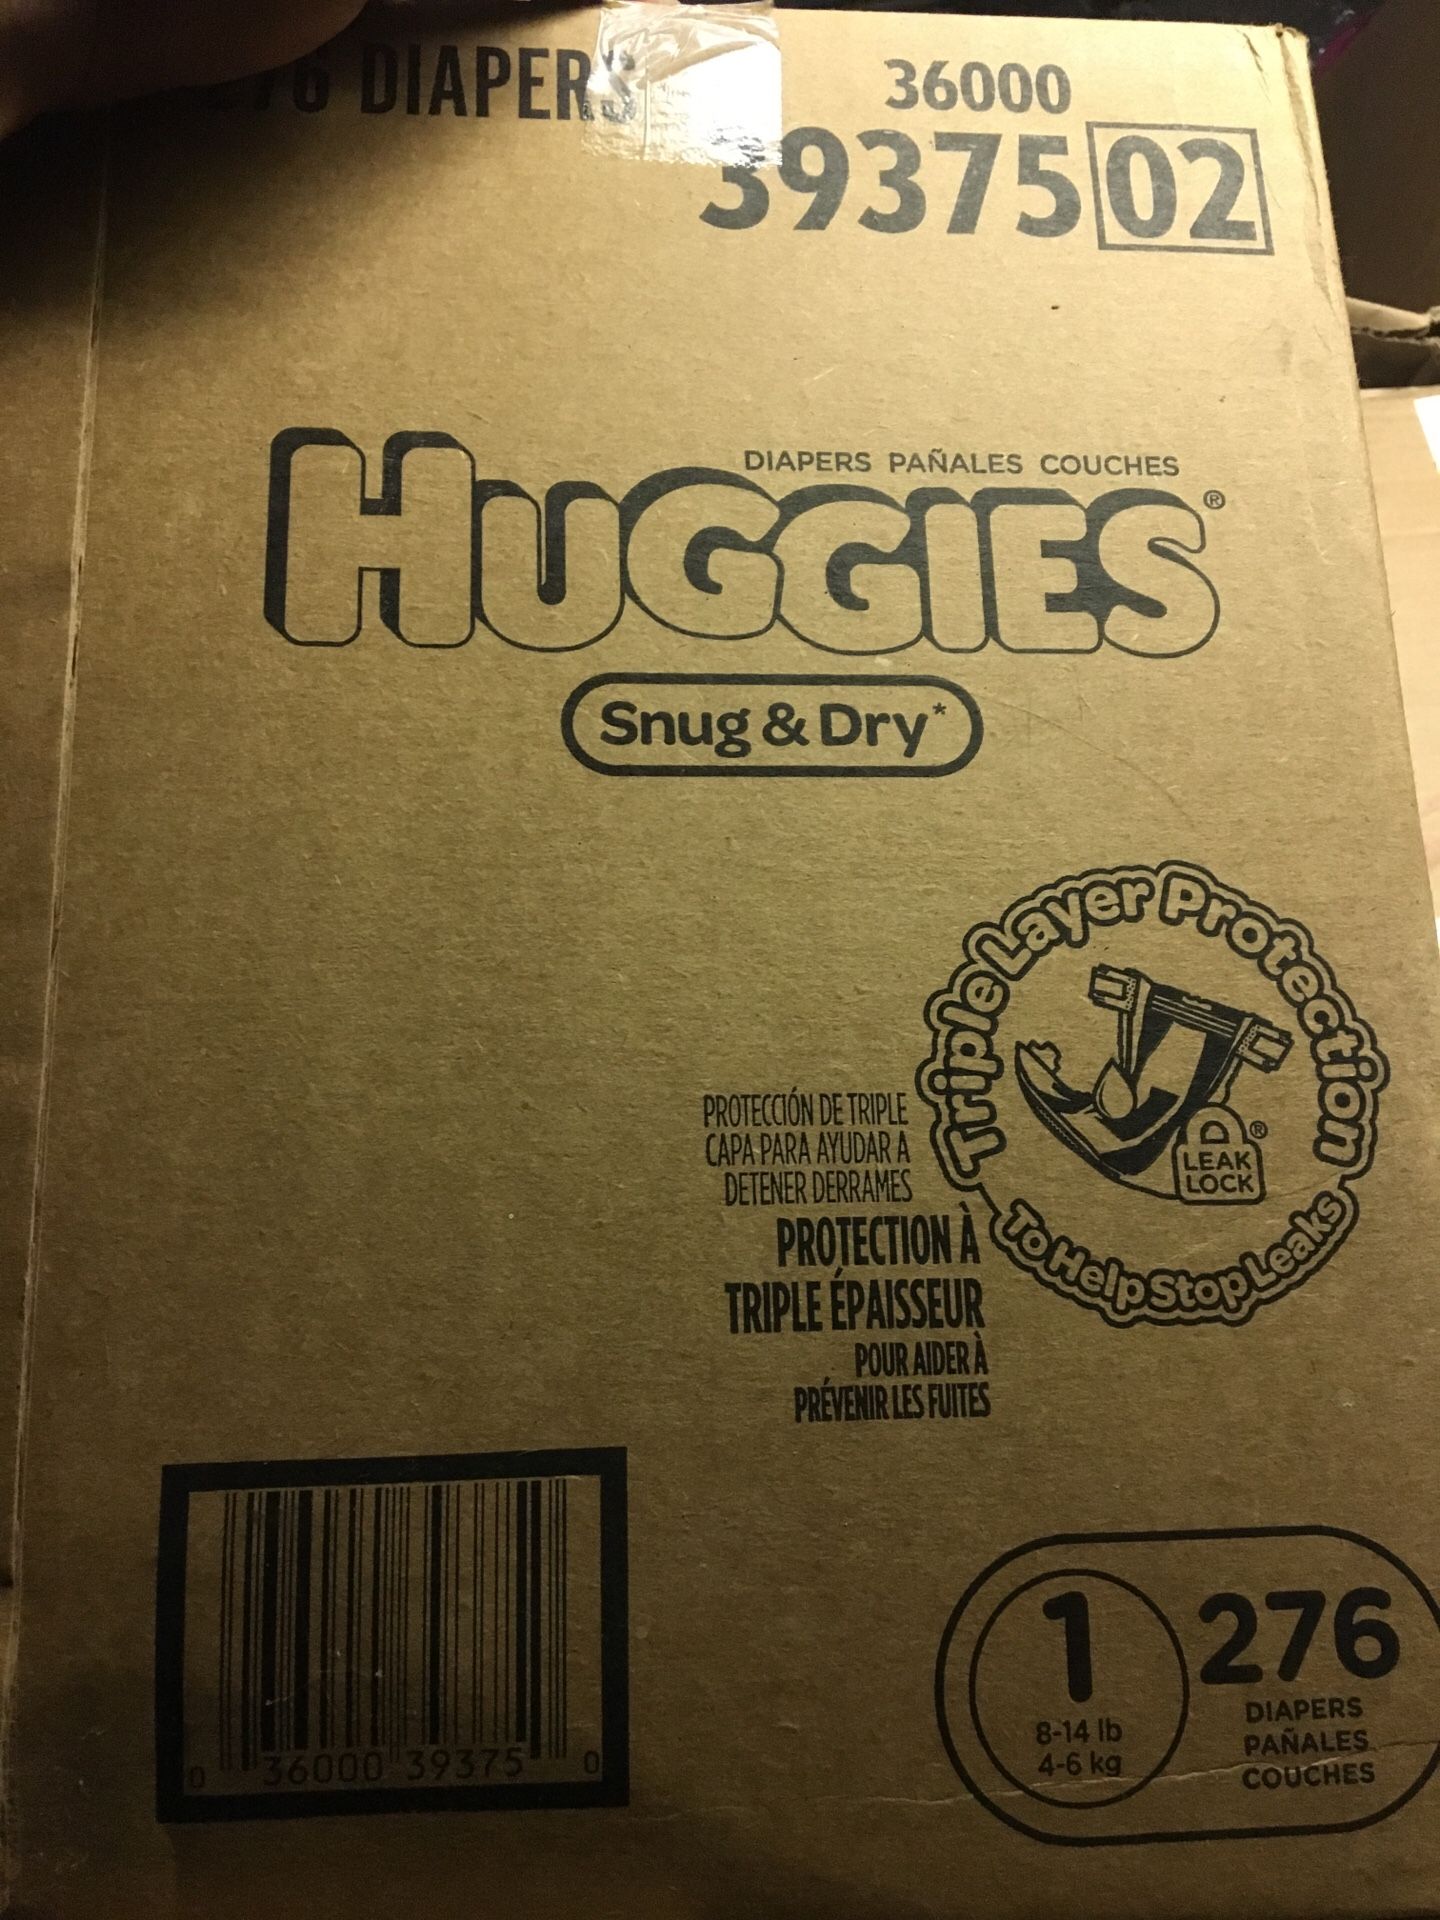 2 boxes of (276 ct) Huggies diapers